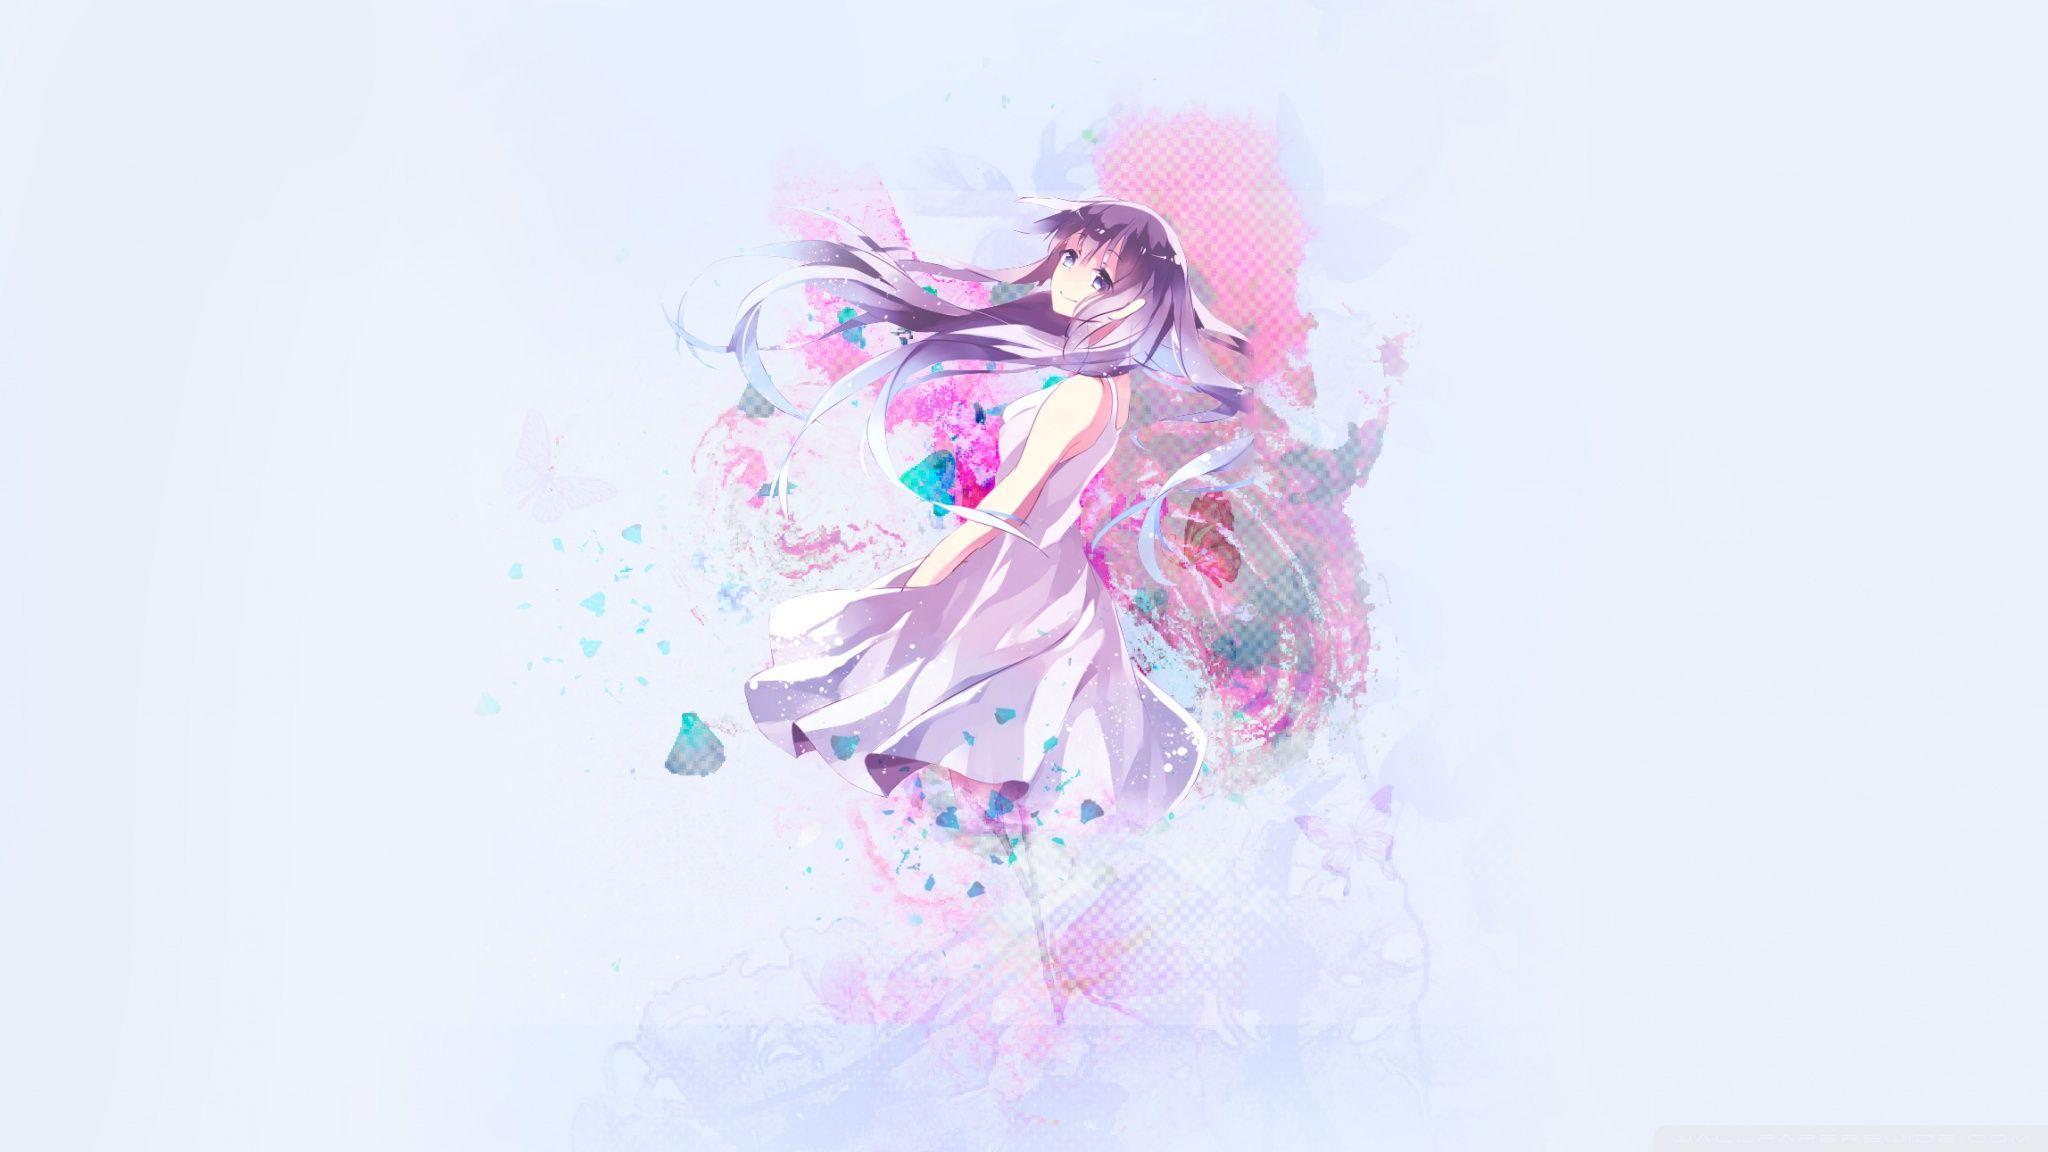 Pastel Aesthetic Anime Wallpapers - Top Free Pastel ...